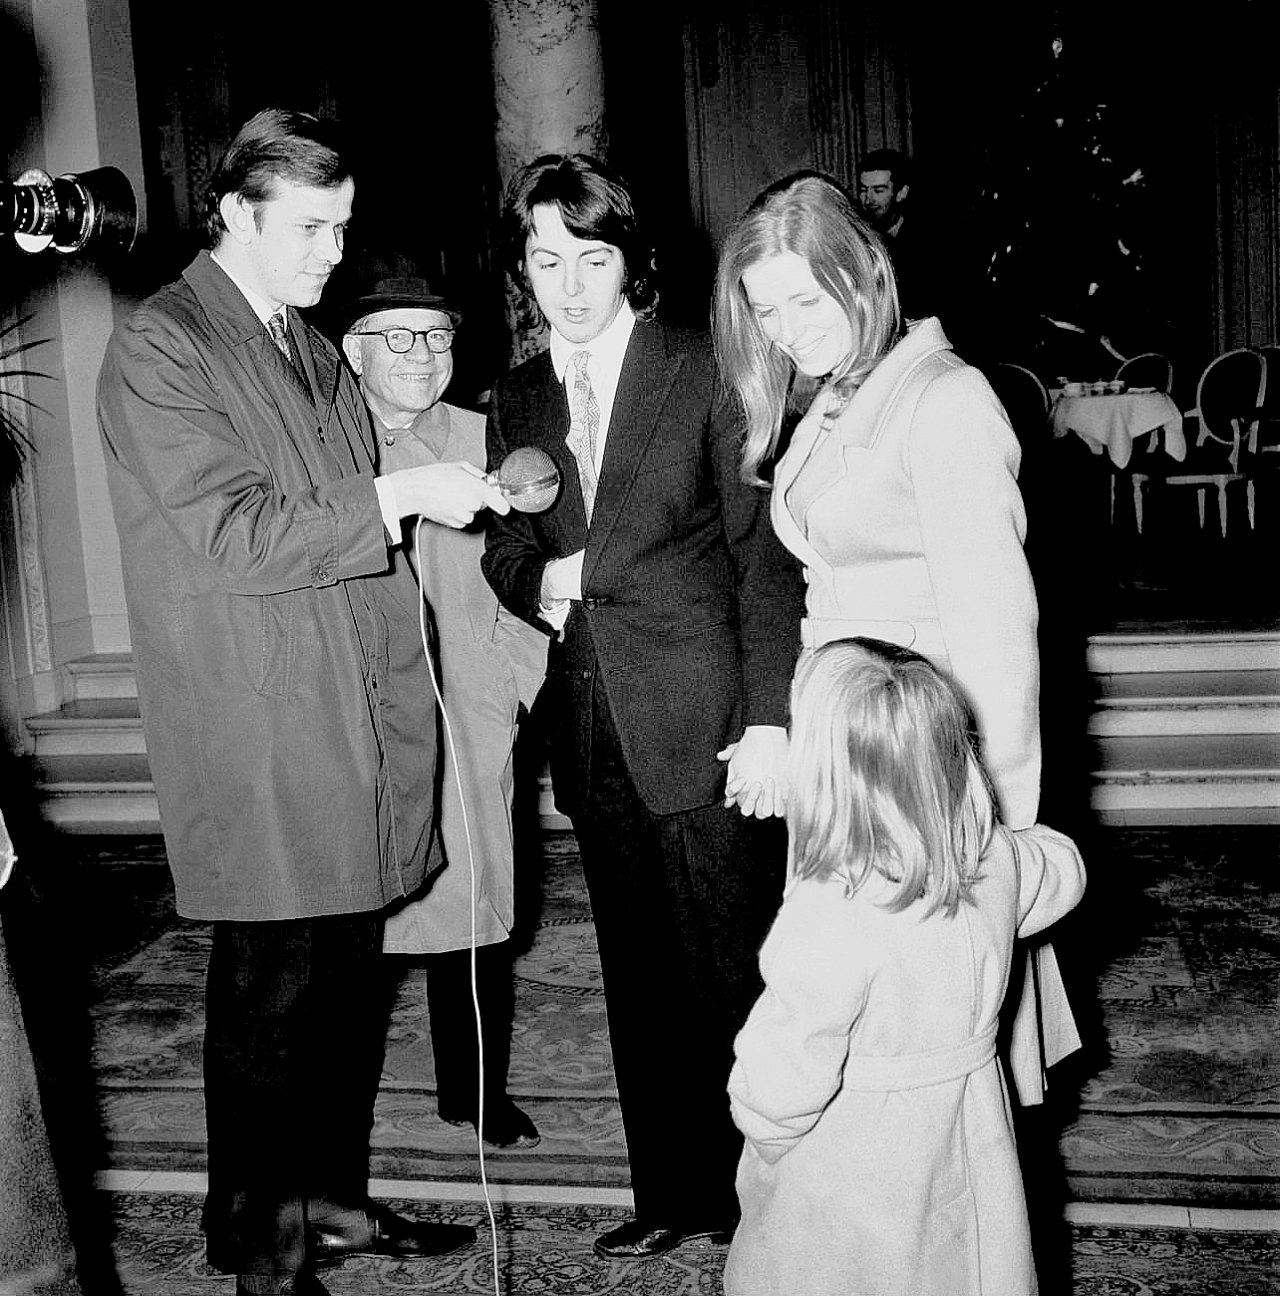 Paul McCartney marries Linda Eastman • The Paul McCartney Project